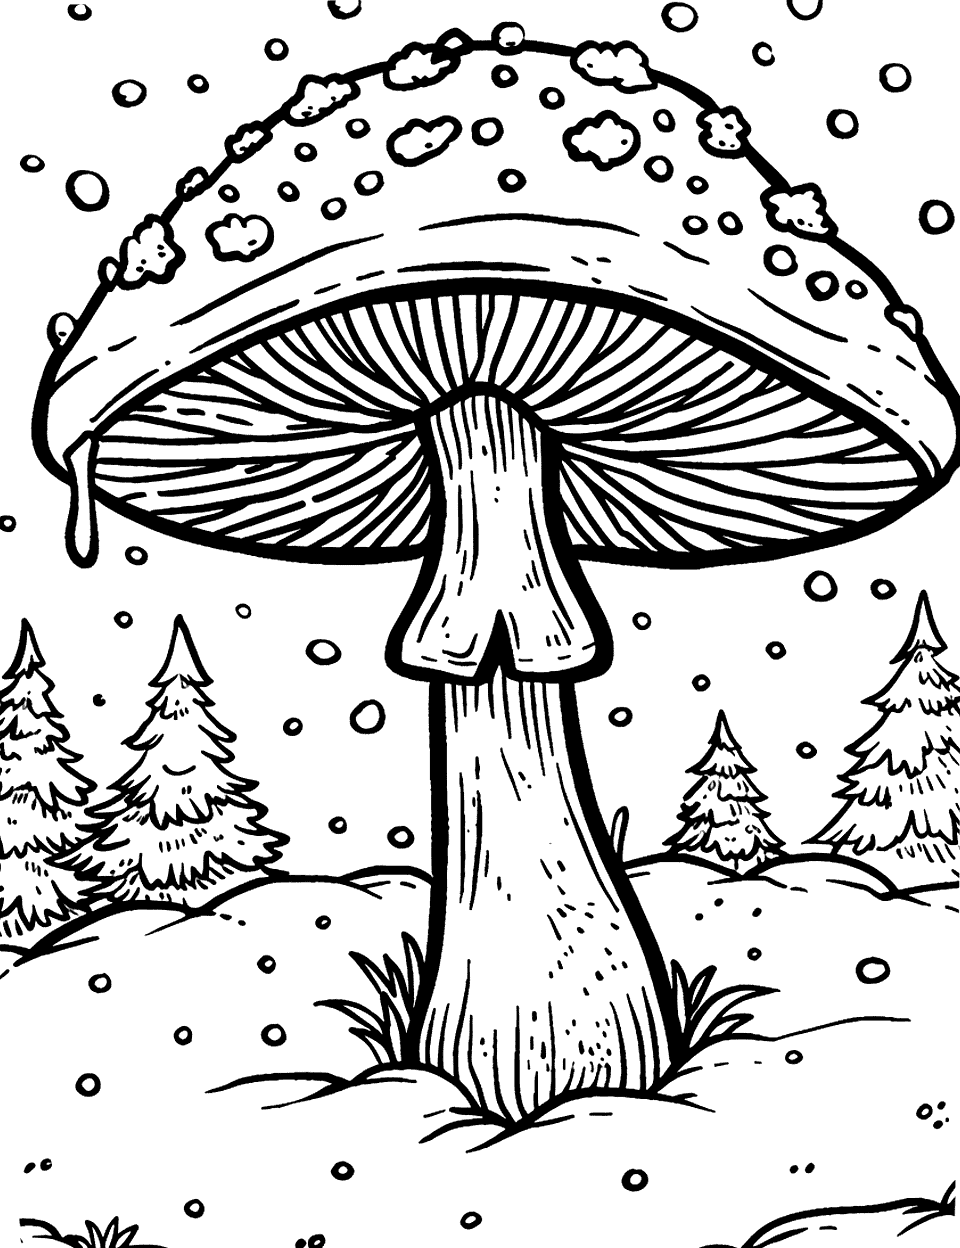 Winter Scene with Frosty Mushroom Coloring Page - A mushroom capped with frost in a chilly winter scene.